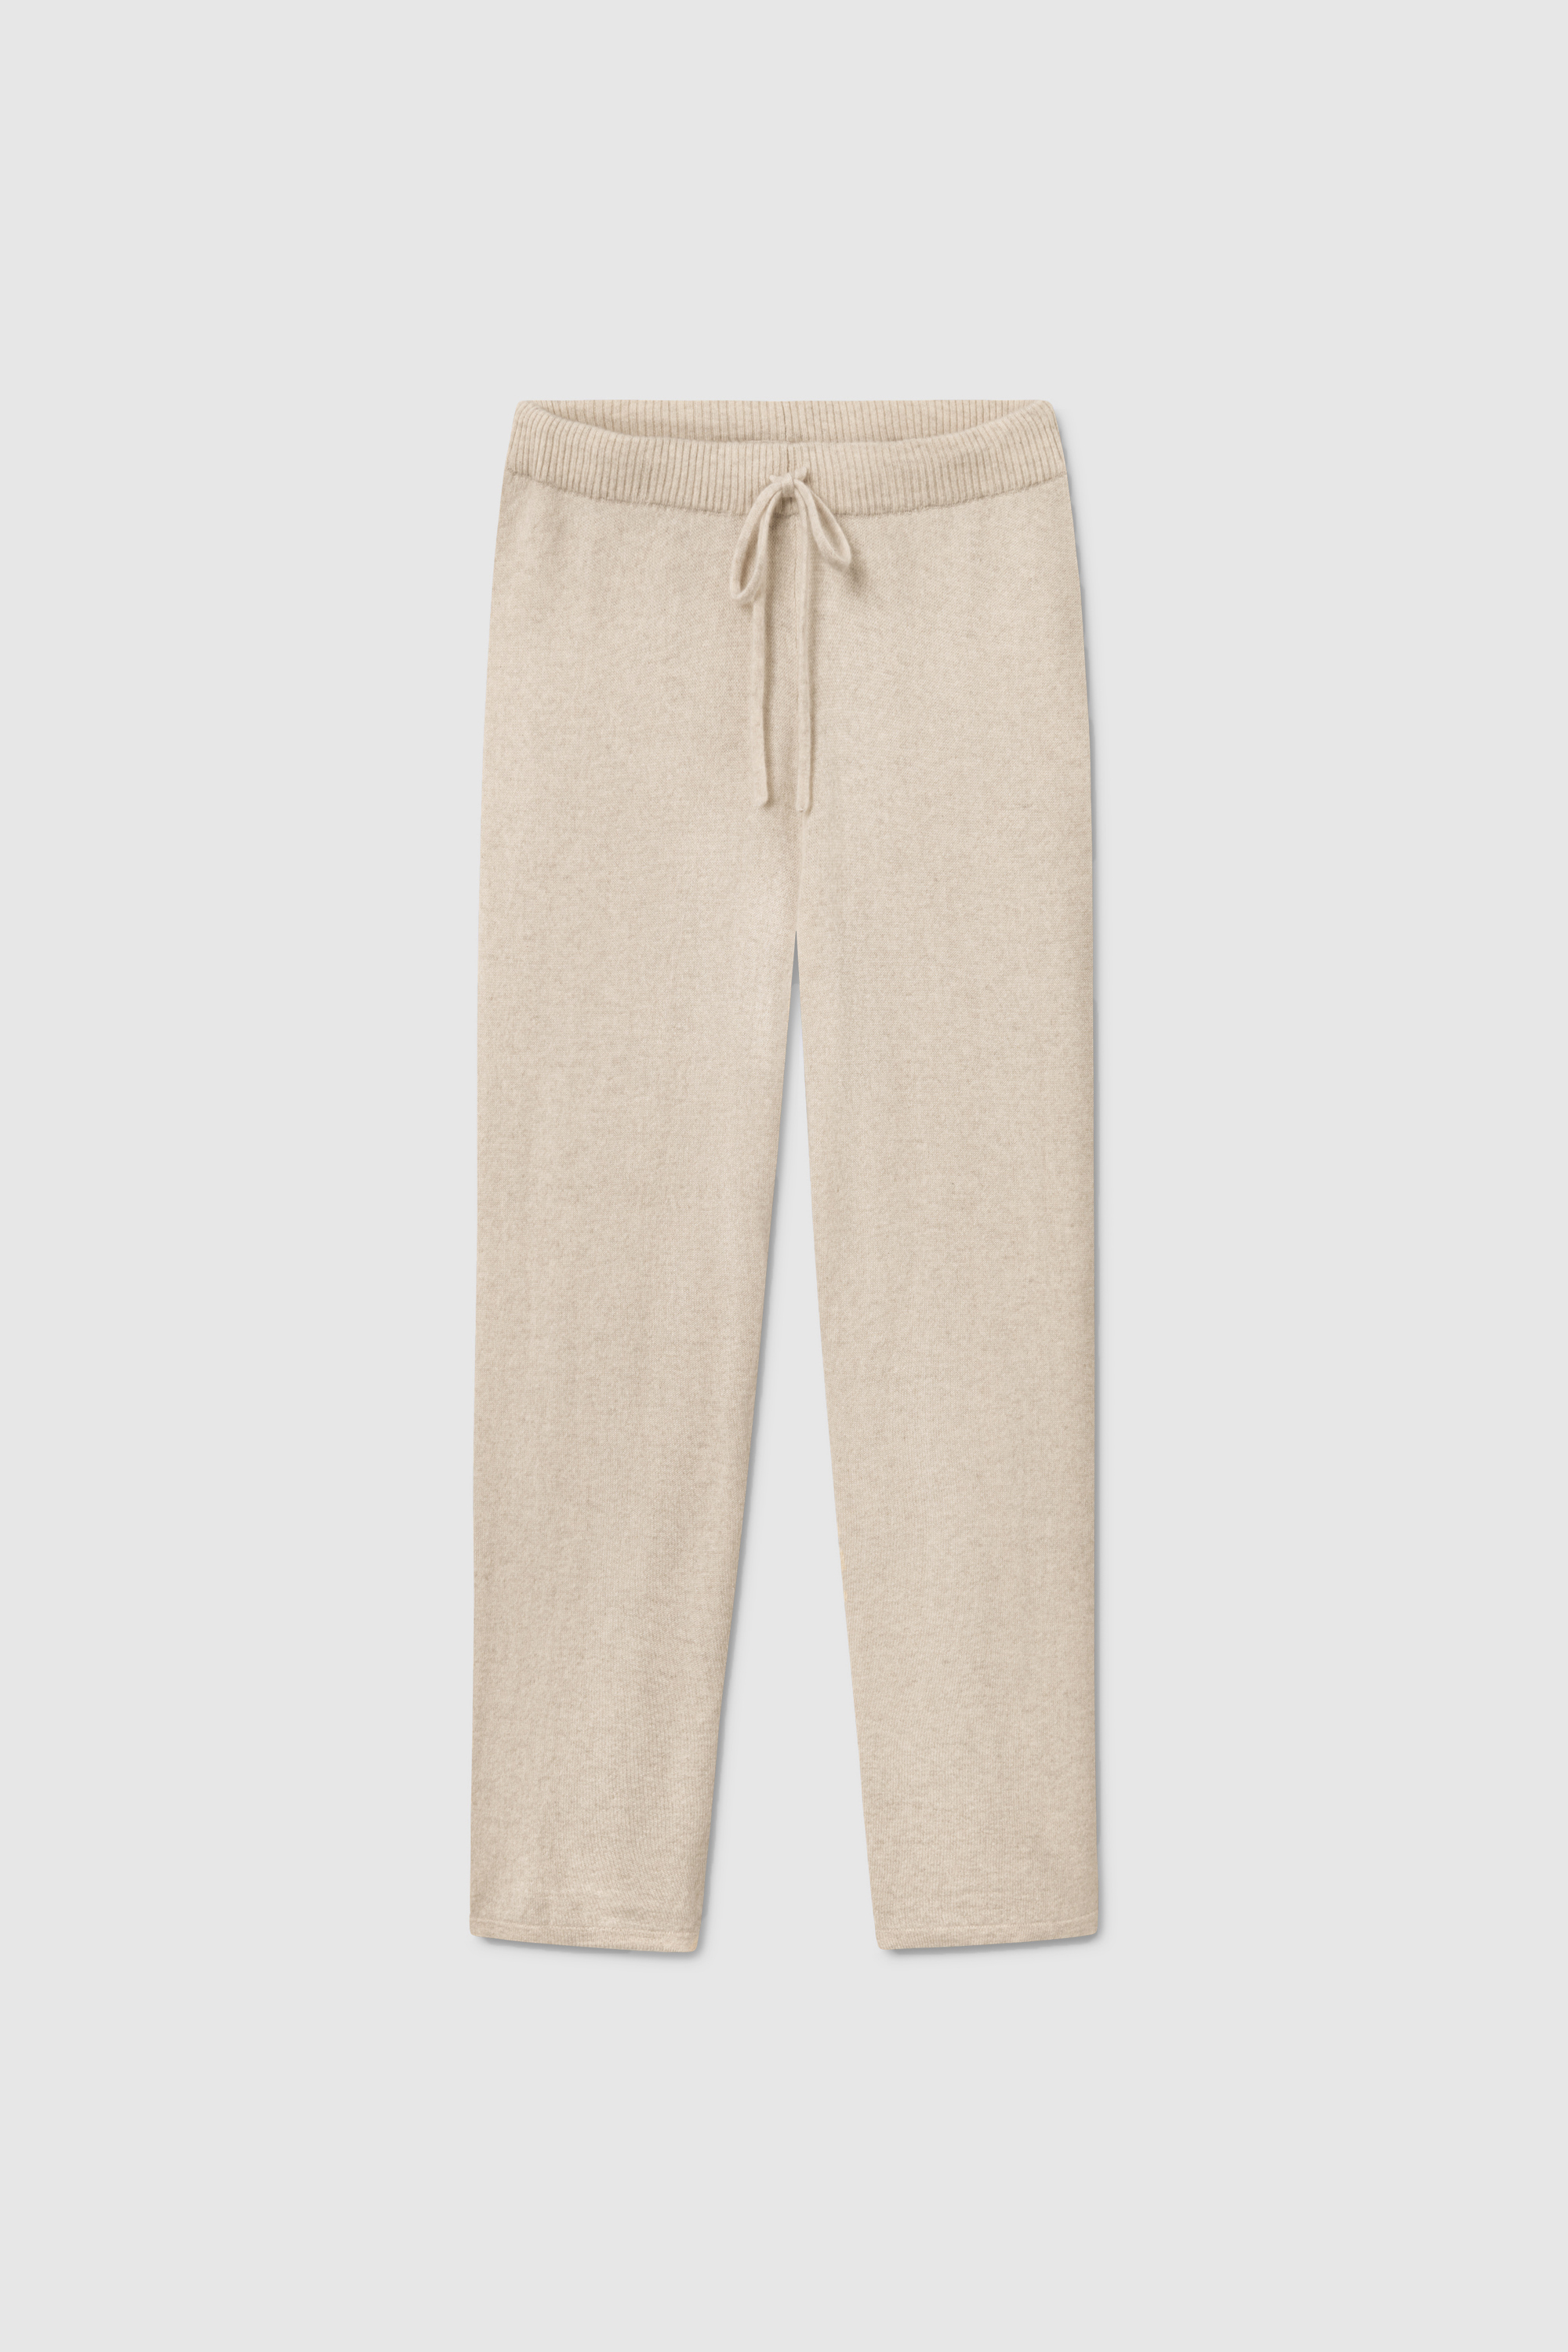 Loro Piana Pantaflat Wool-Cashmere Trousers | Pants | Harry Rosen